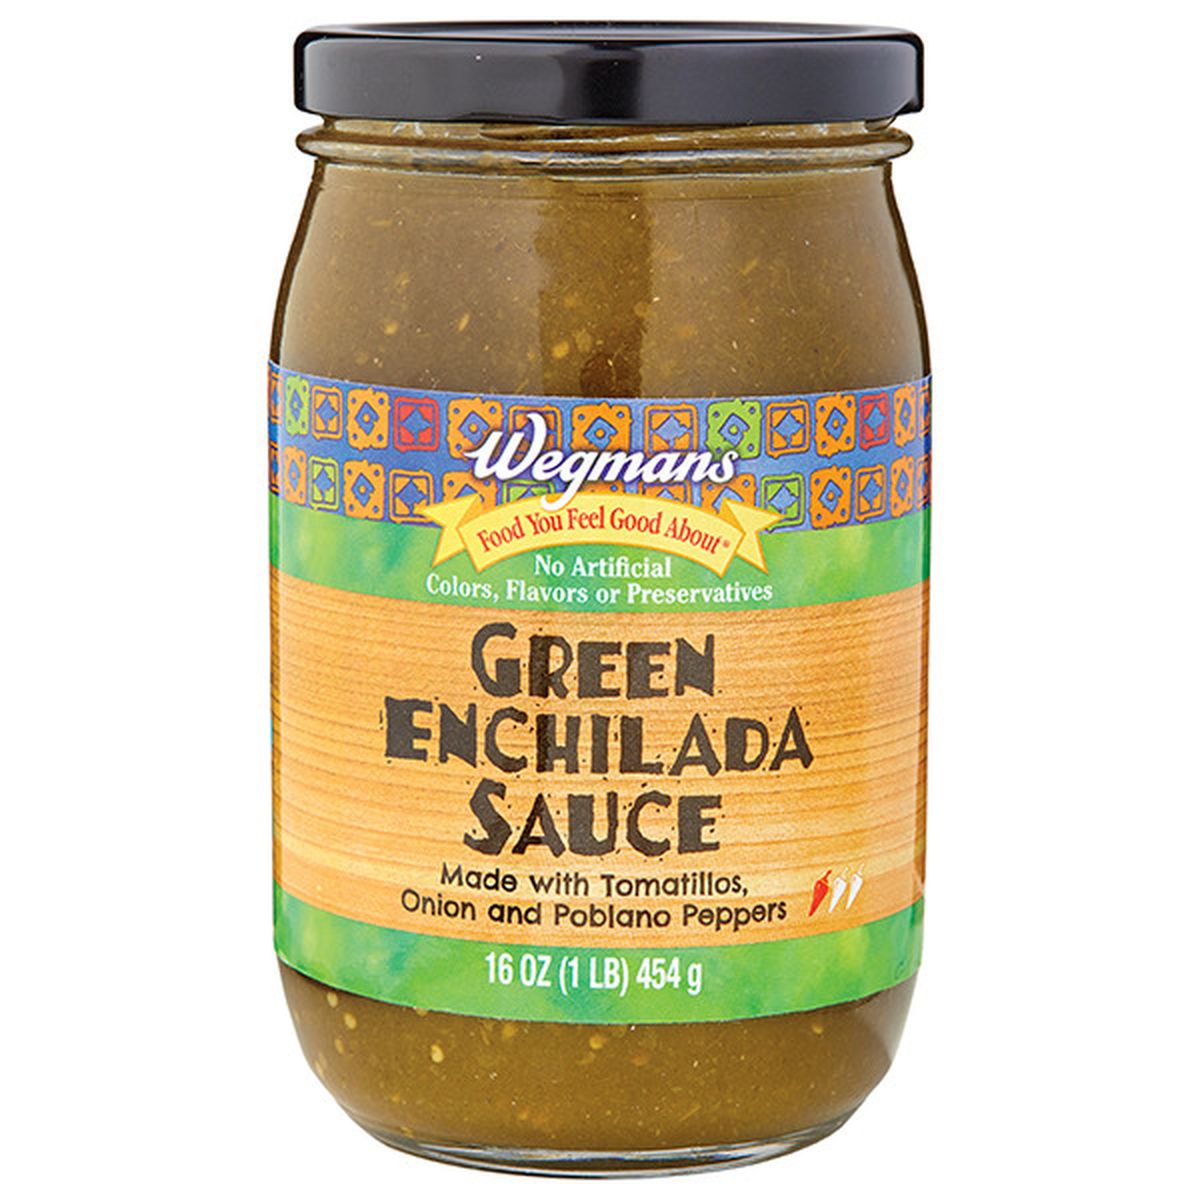 Calories in Wegmans Green Enchilada Sauce